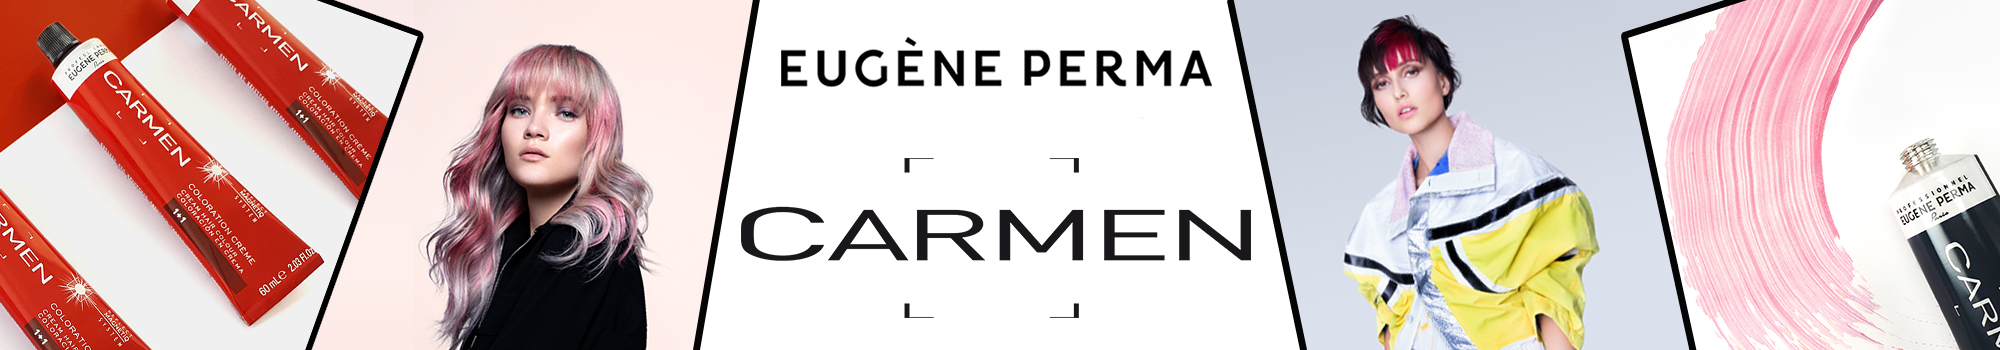 Carmen Eugène Perma